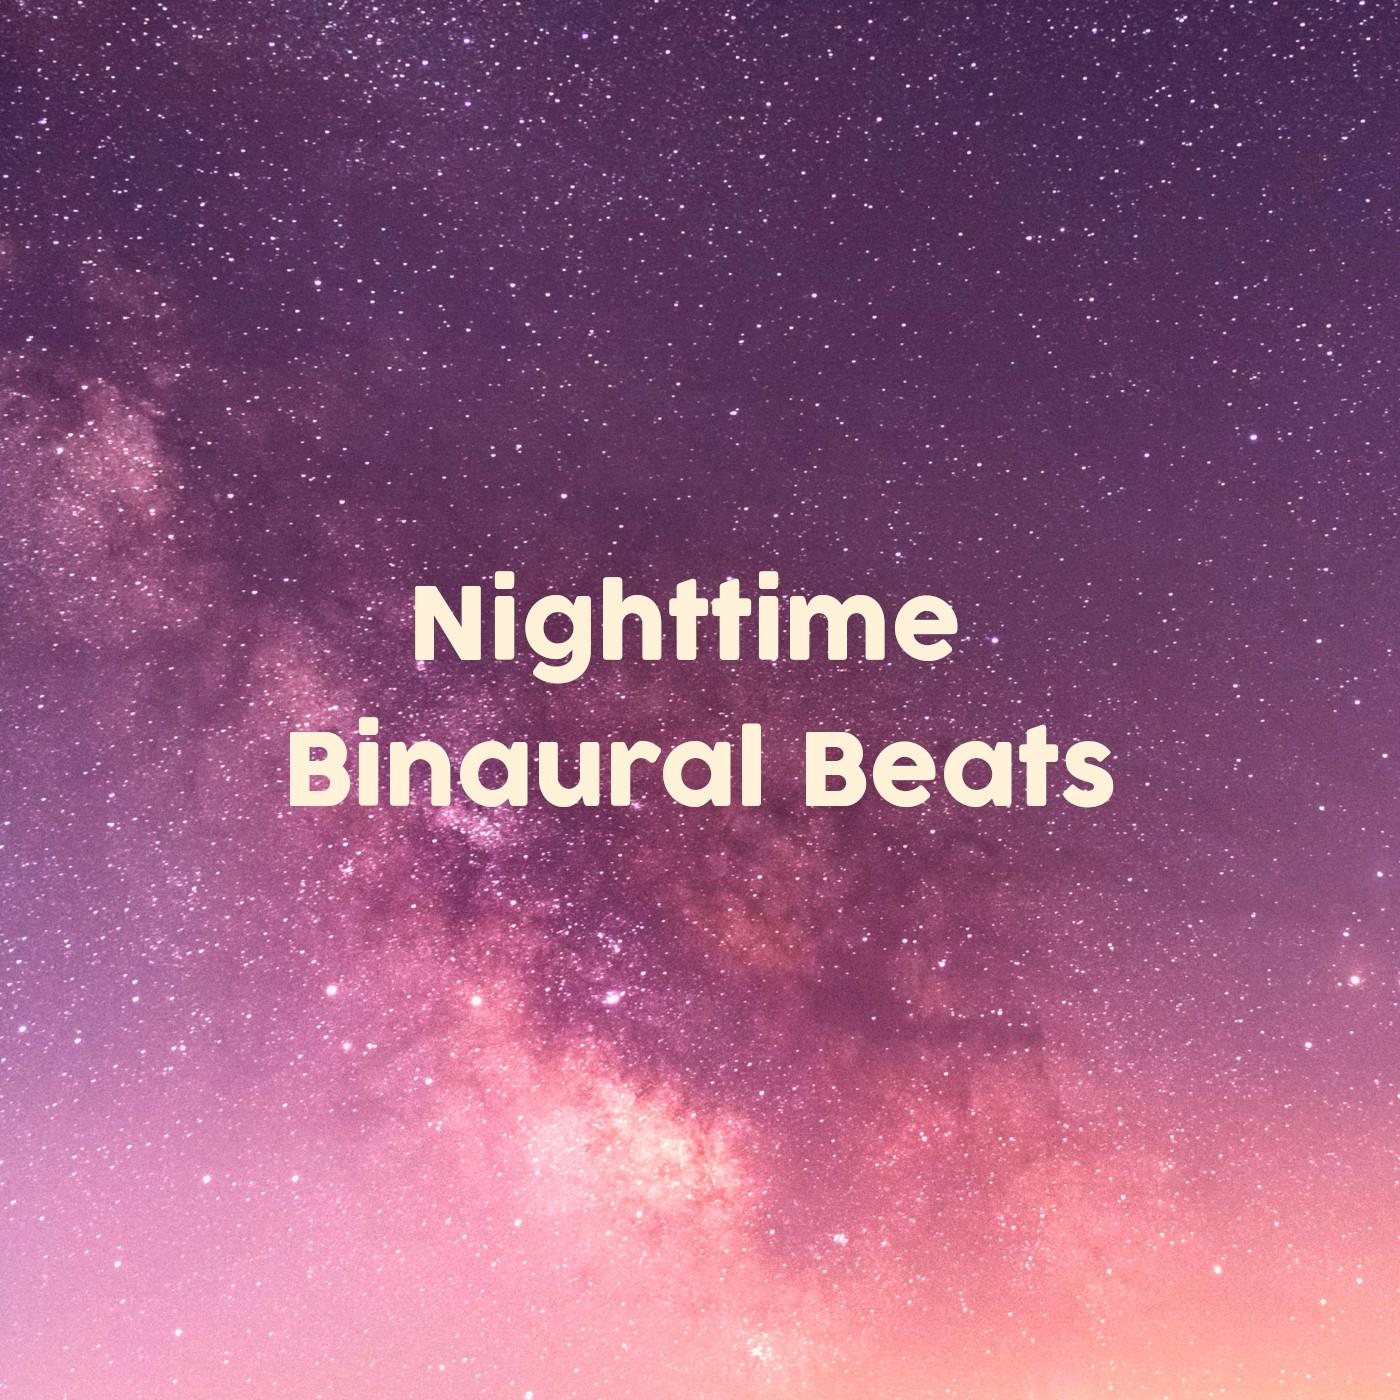 Nighttime Binaural Beats